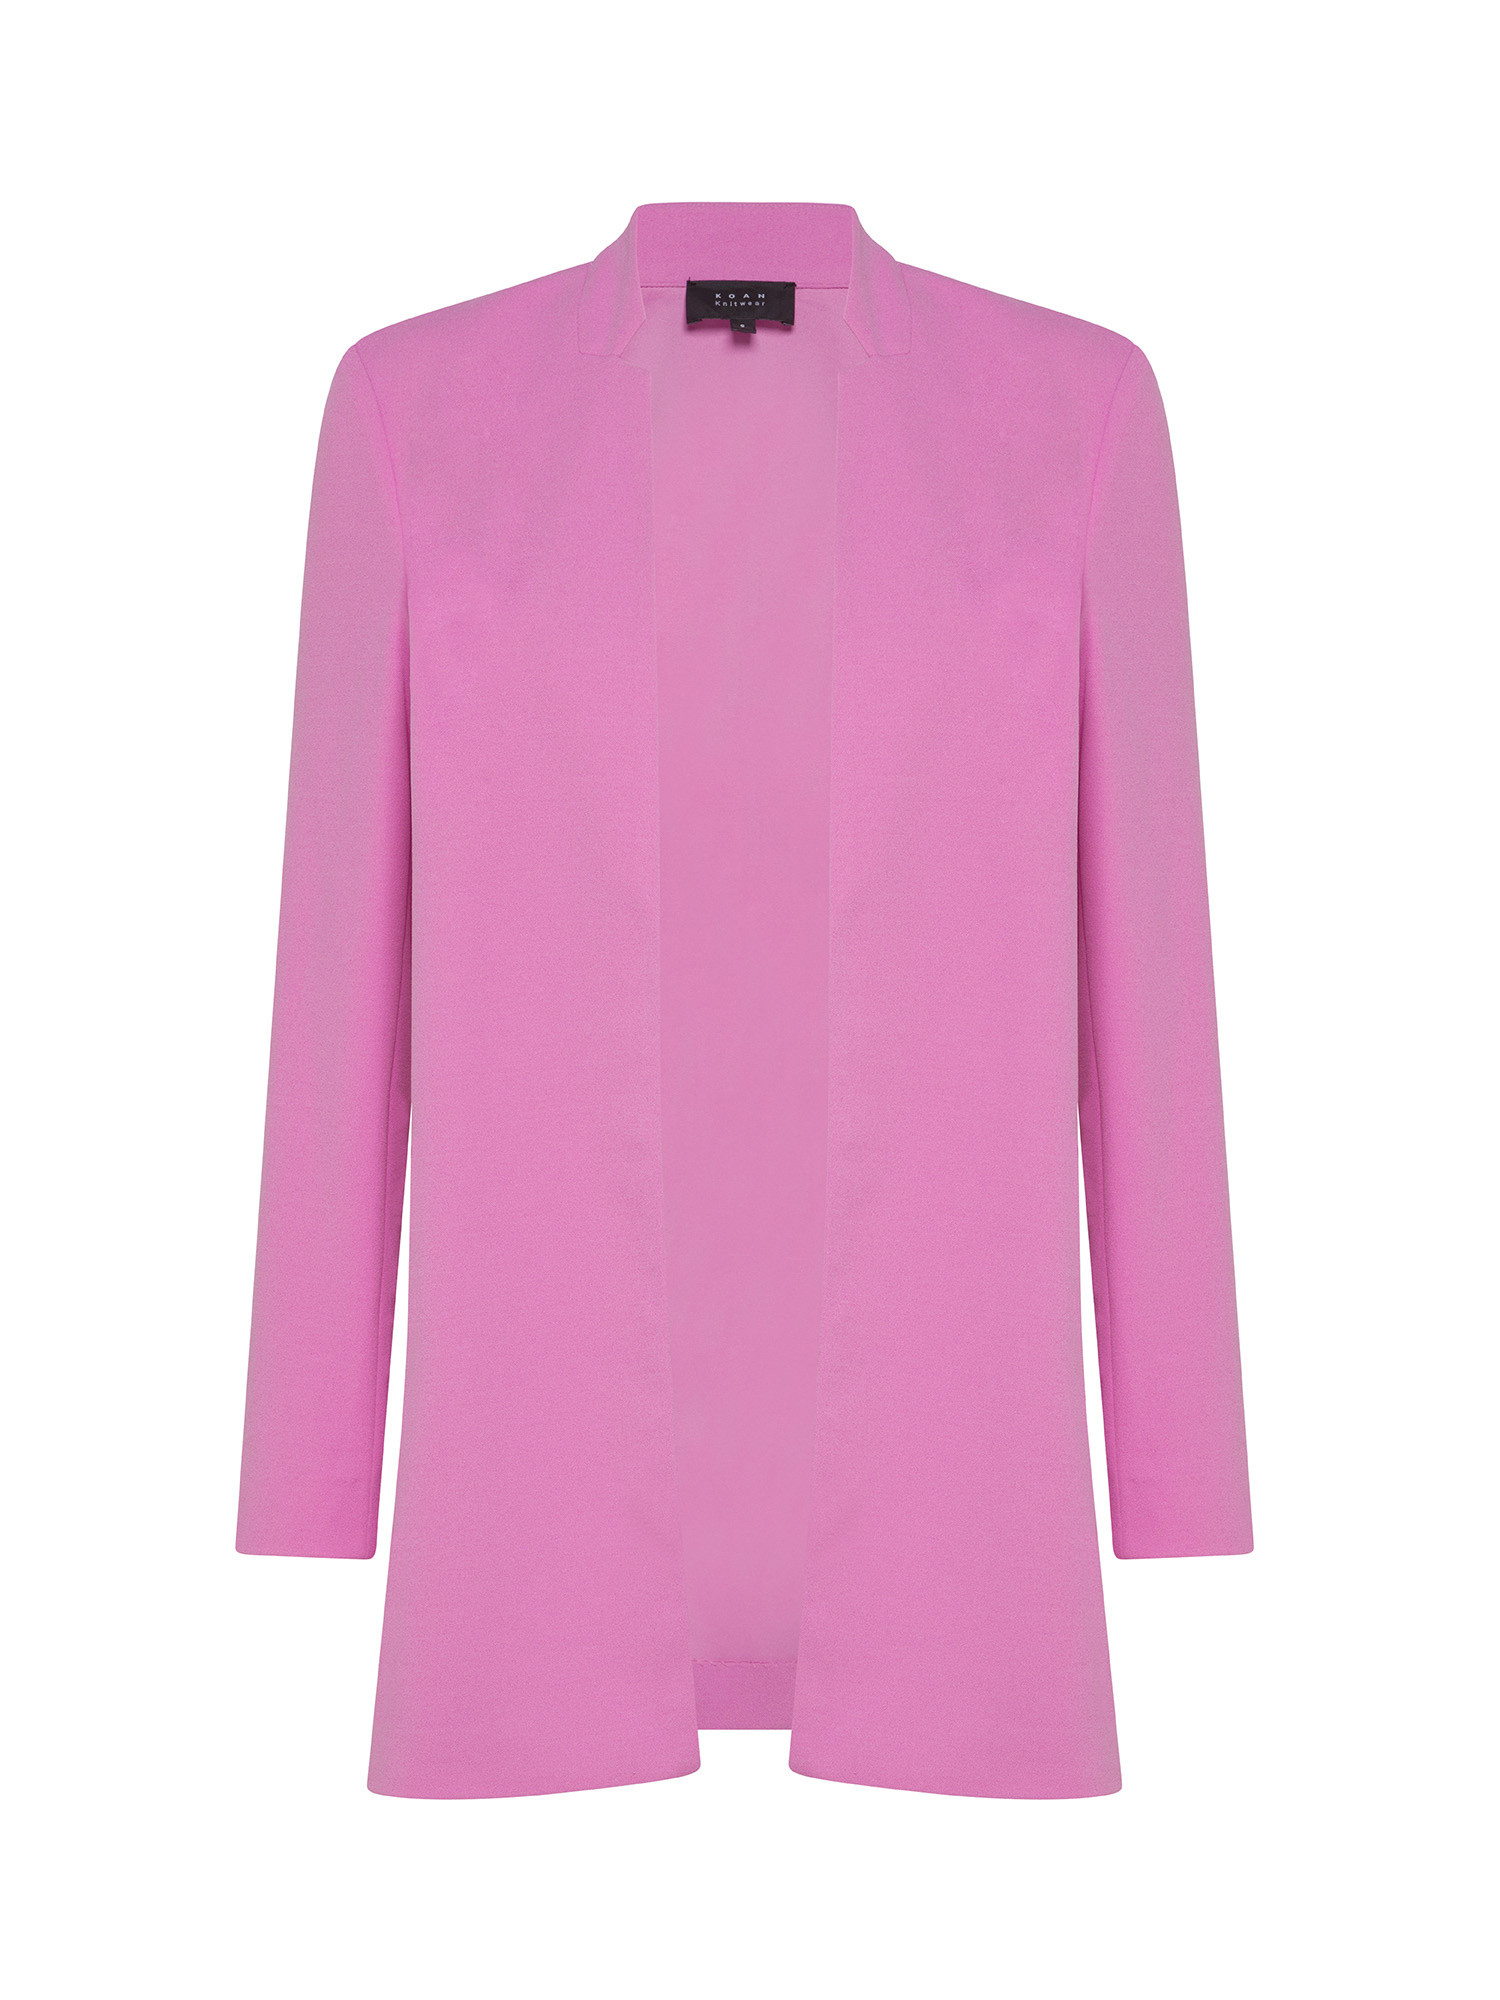 Koan - Long crepe jacket, Pink, large image number 0